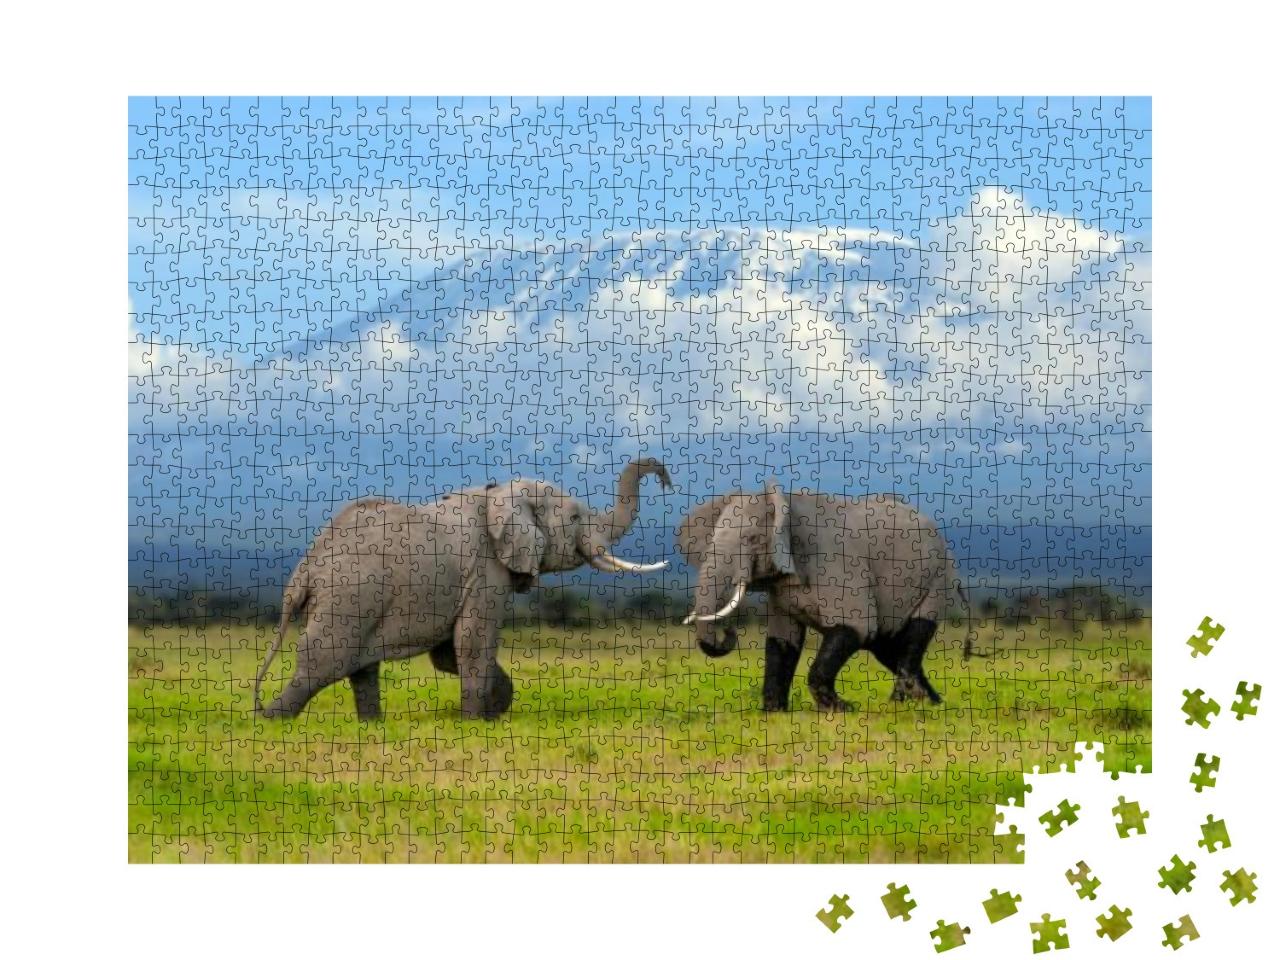 Puzzle 1000 Teile „Elefant vor dem schneebedeckten Kilimandscharo“